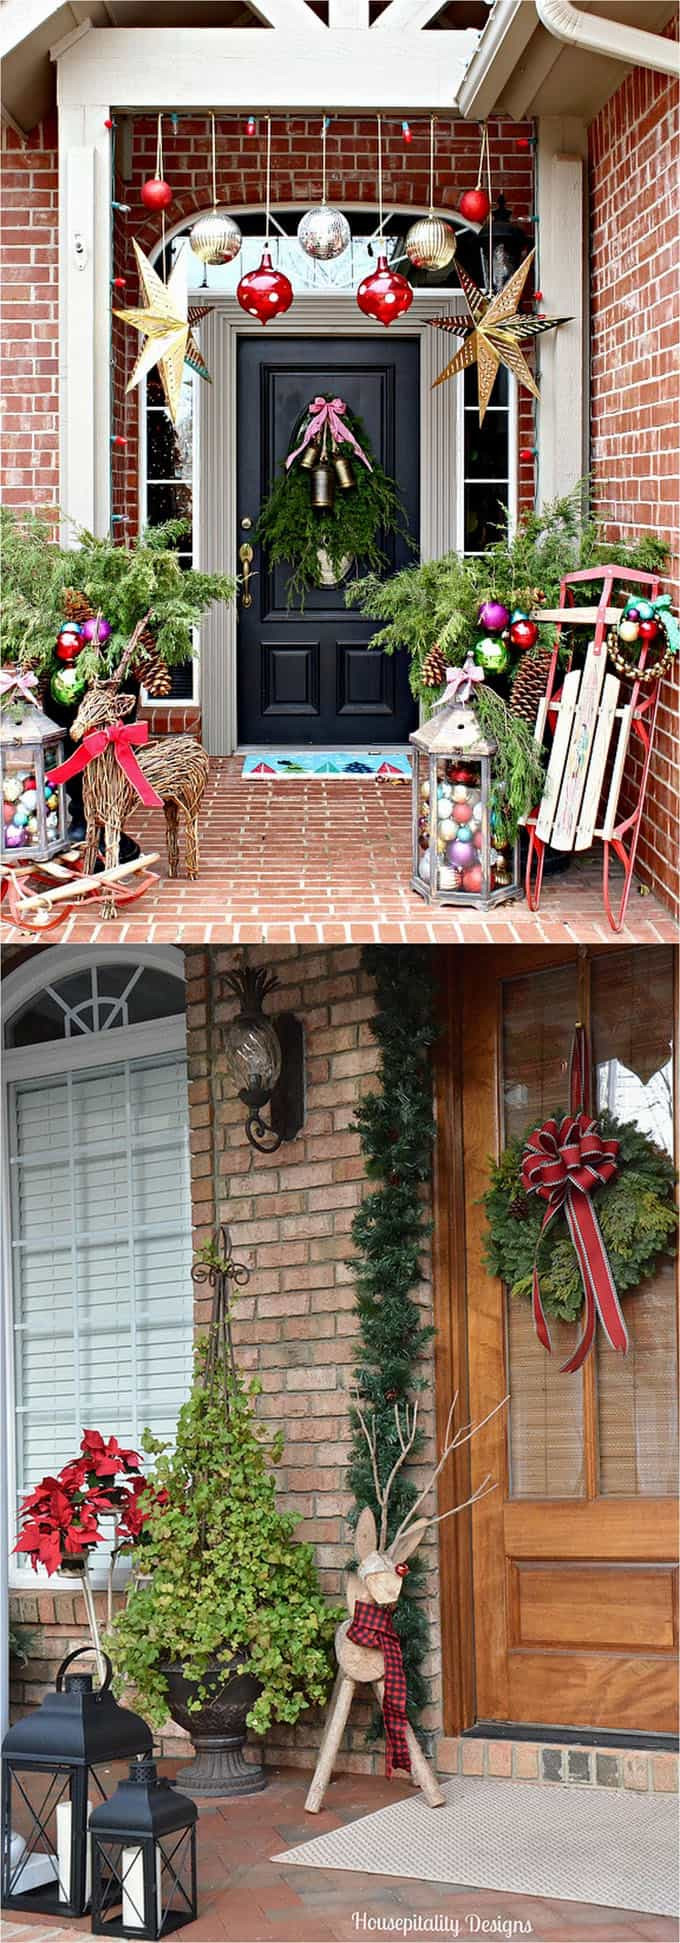 DIY Outdoor Christmas Decorating Ideas
 Gorgeous Outdoor Christmas Decorations 32 Best Ideas